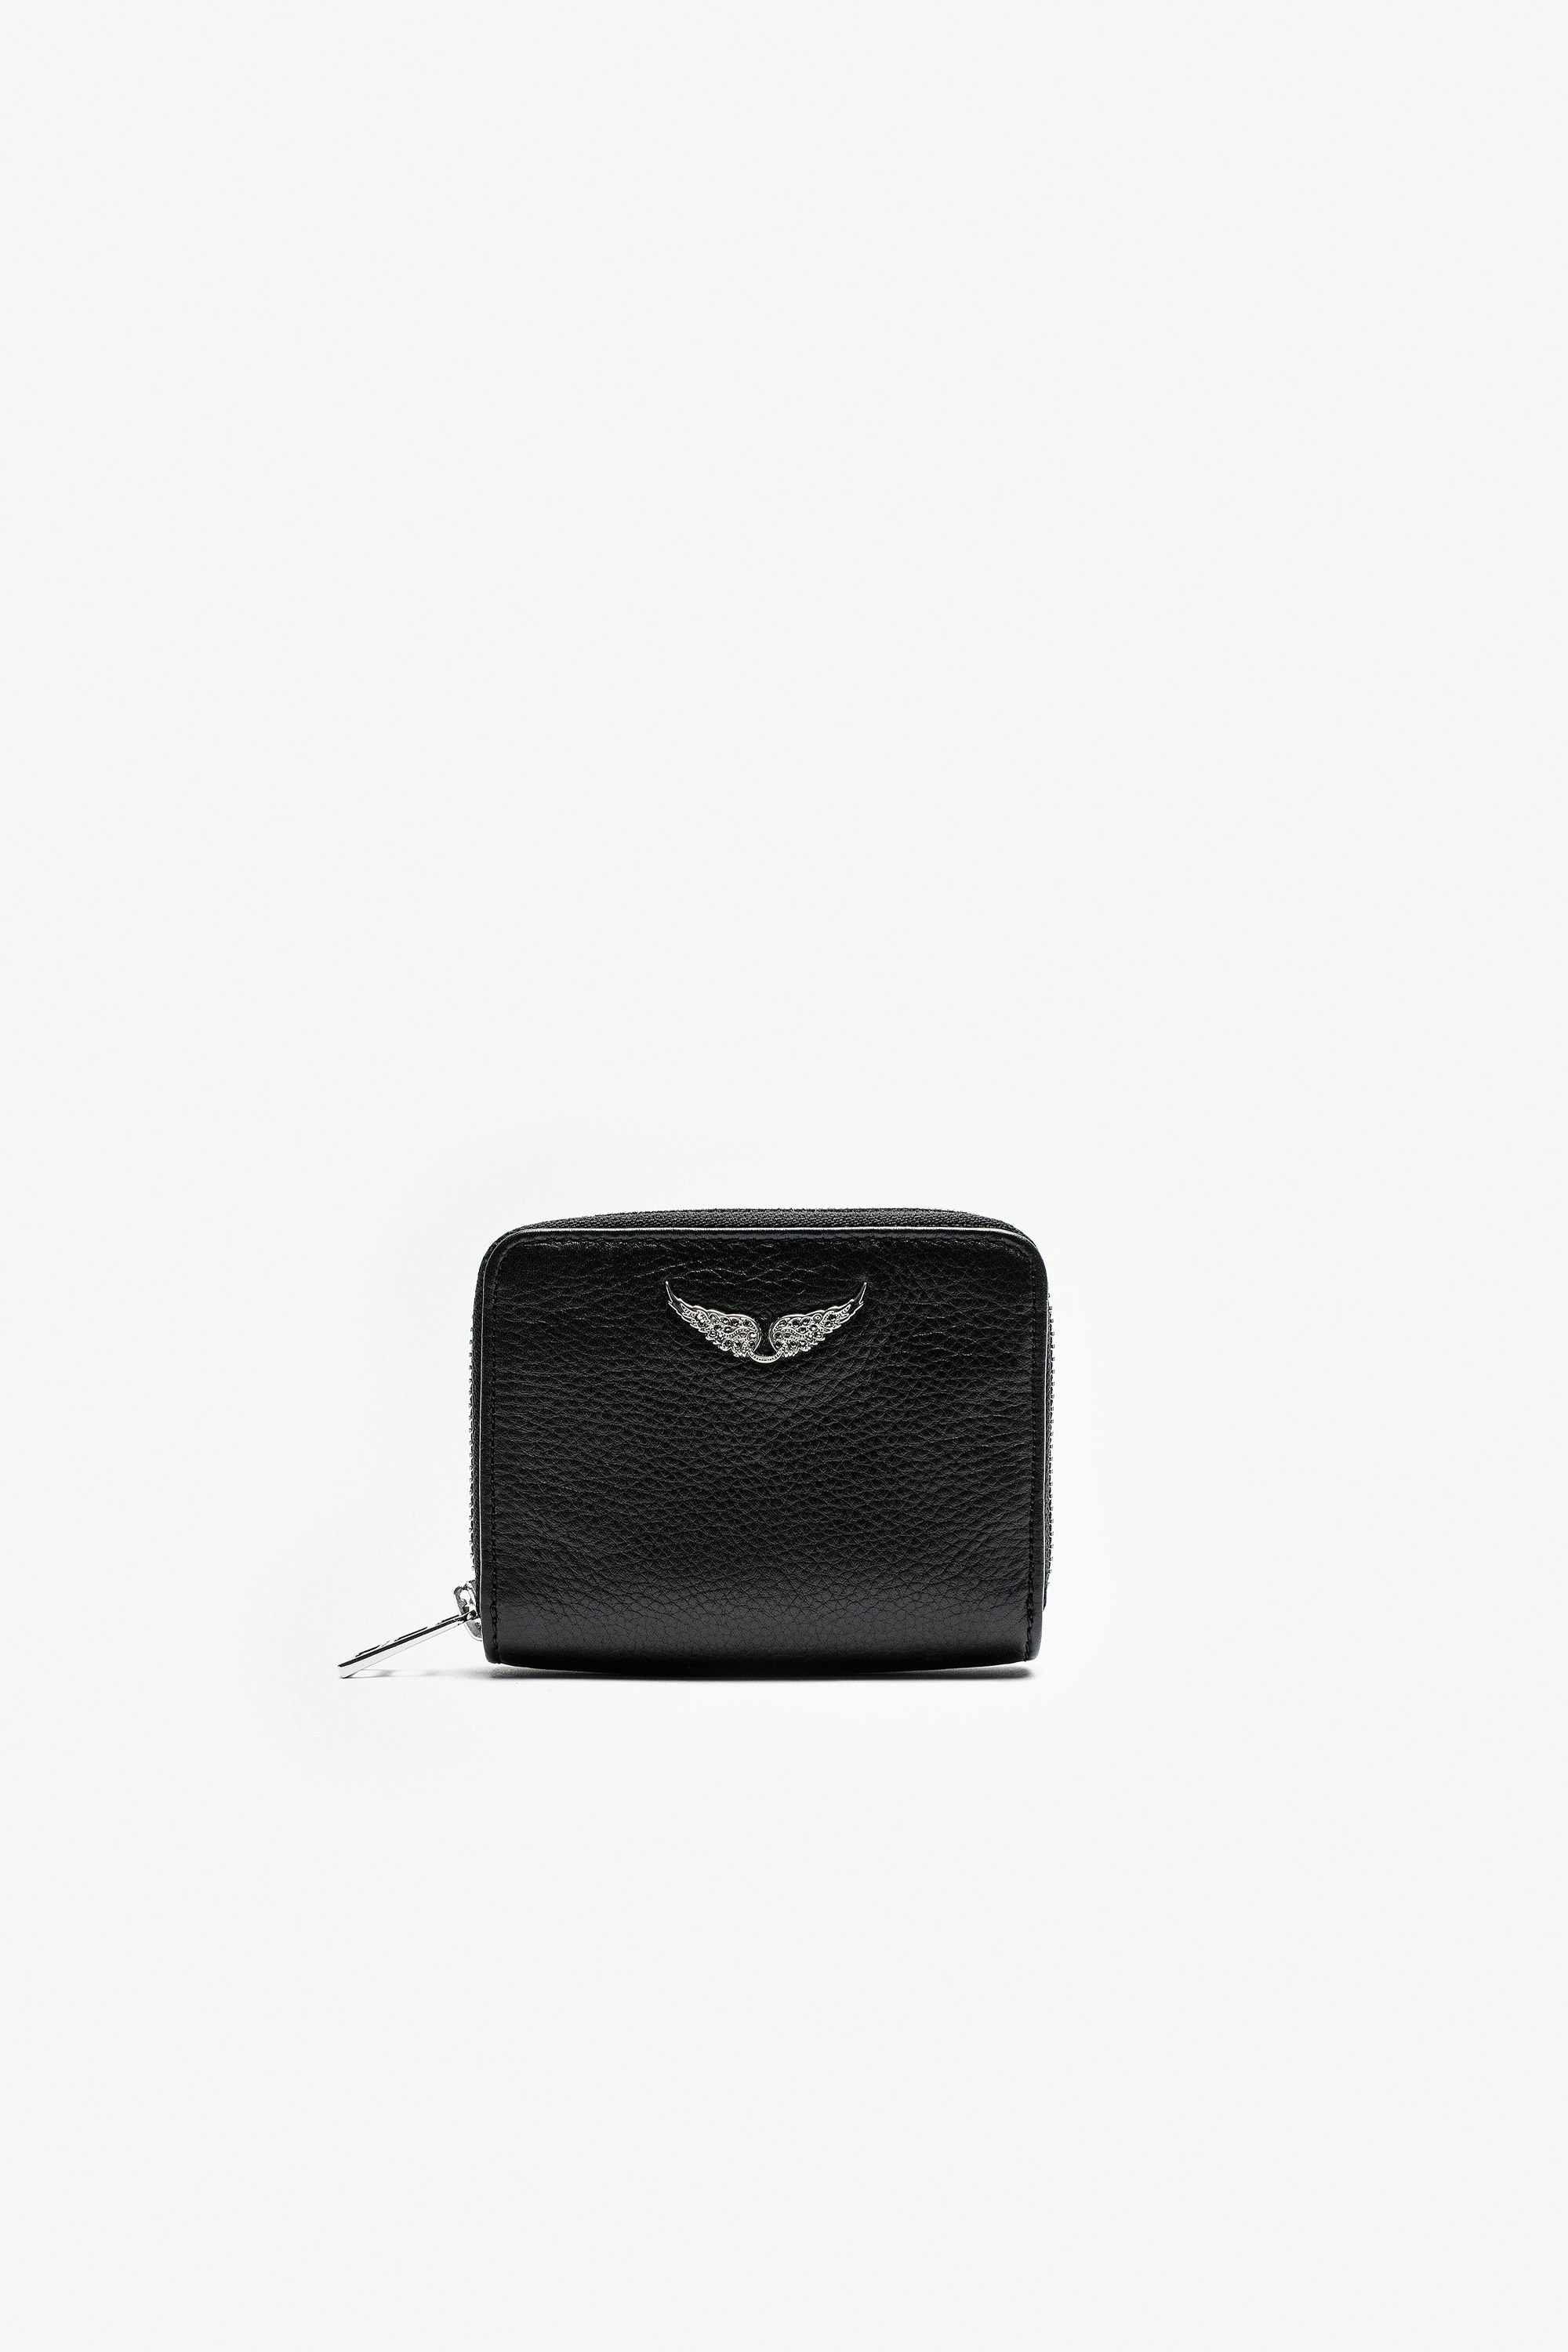 Mini ZV Wallet - Mini ZV women’s black leather purse.